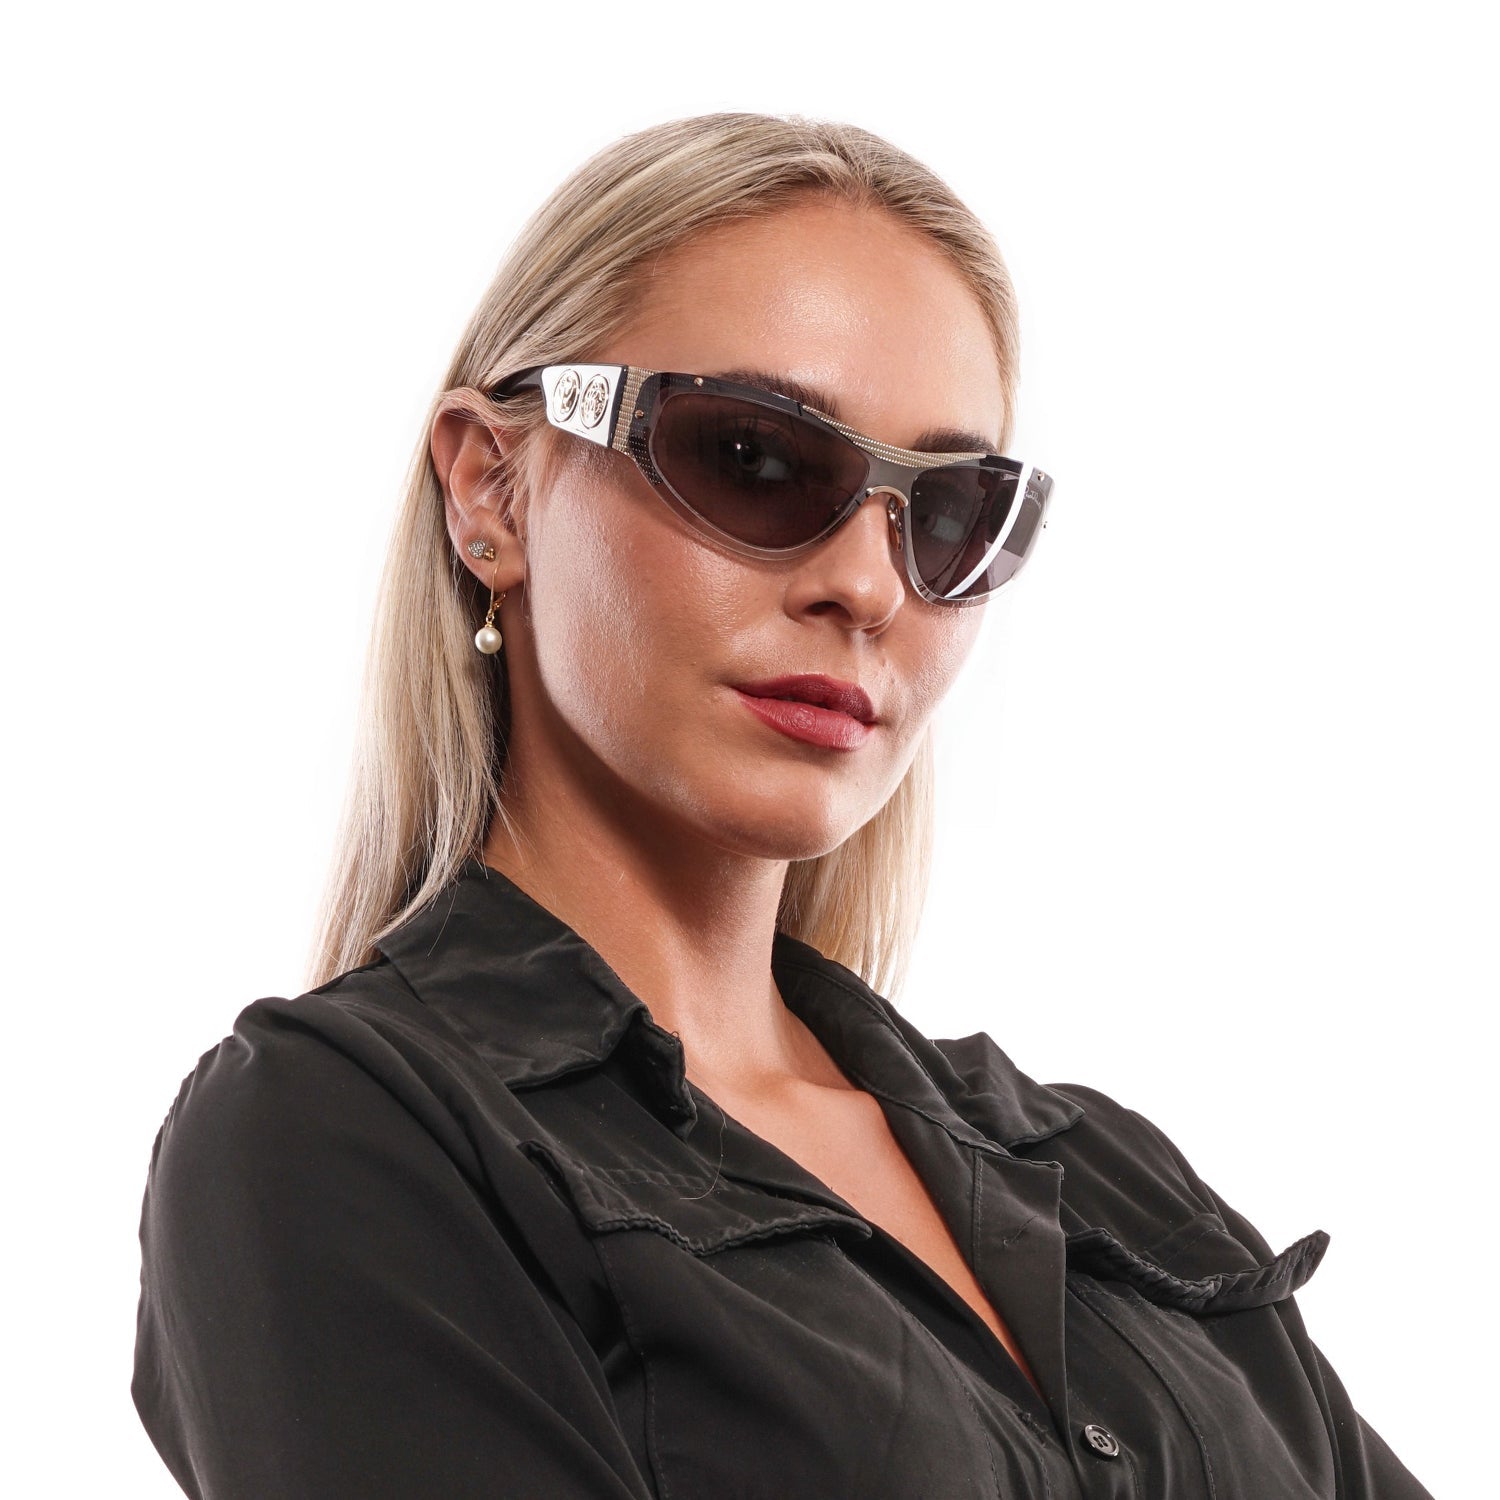 Roberto Cavalli Grey Sunglasses for Woman - Fizigo